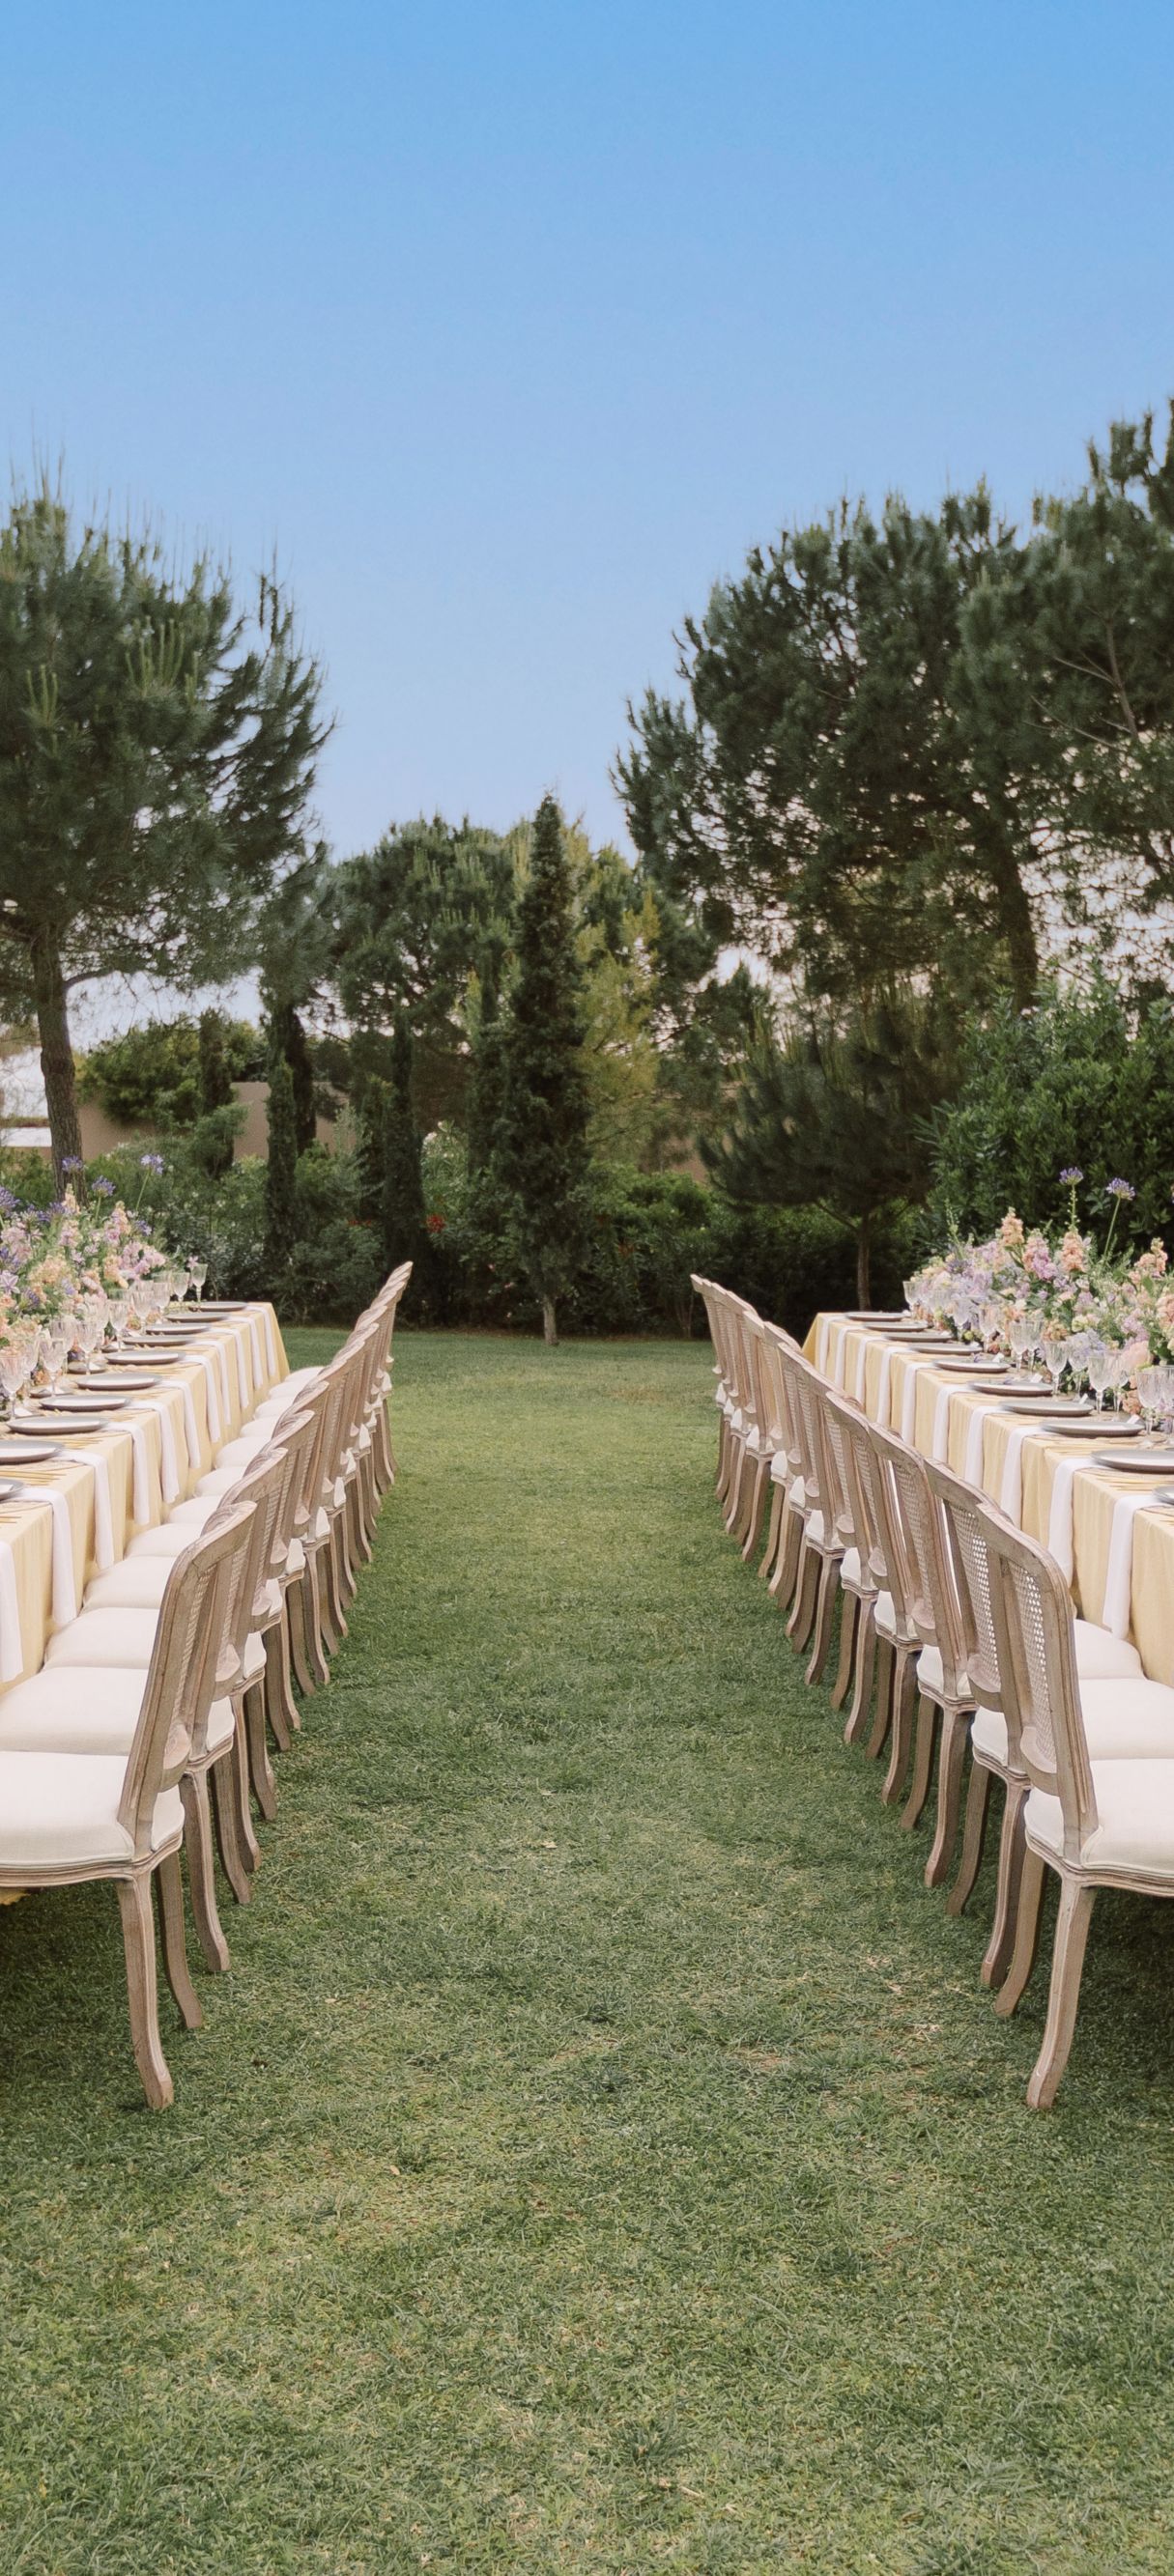 Outdoor wedding dinner tables